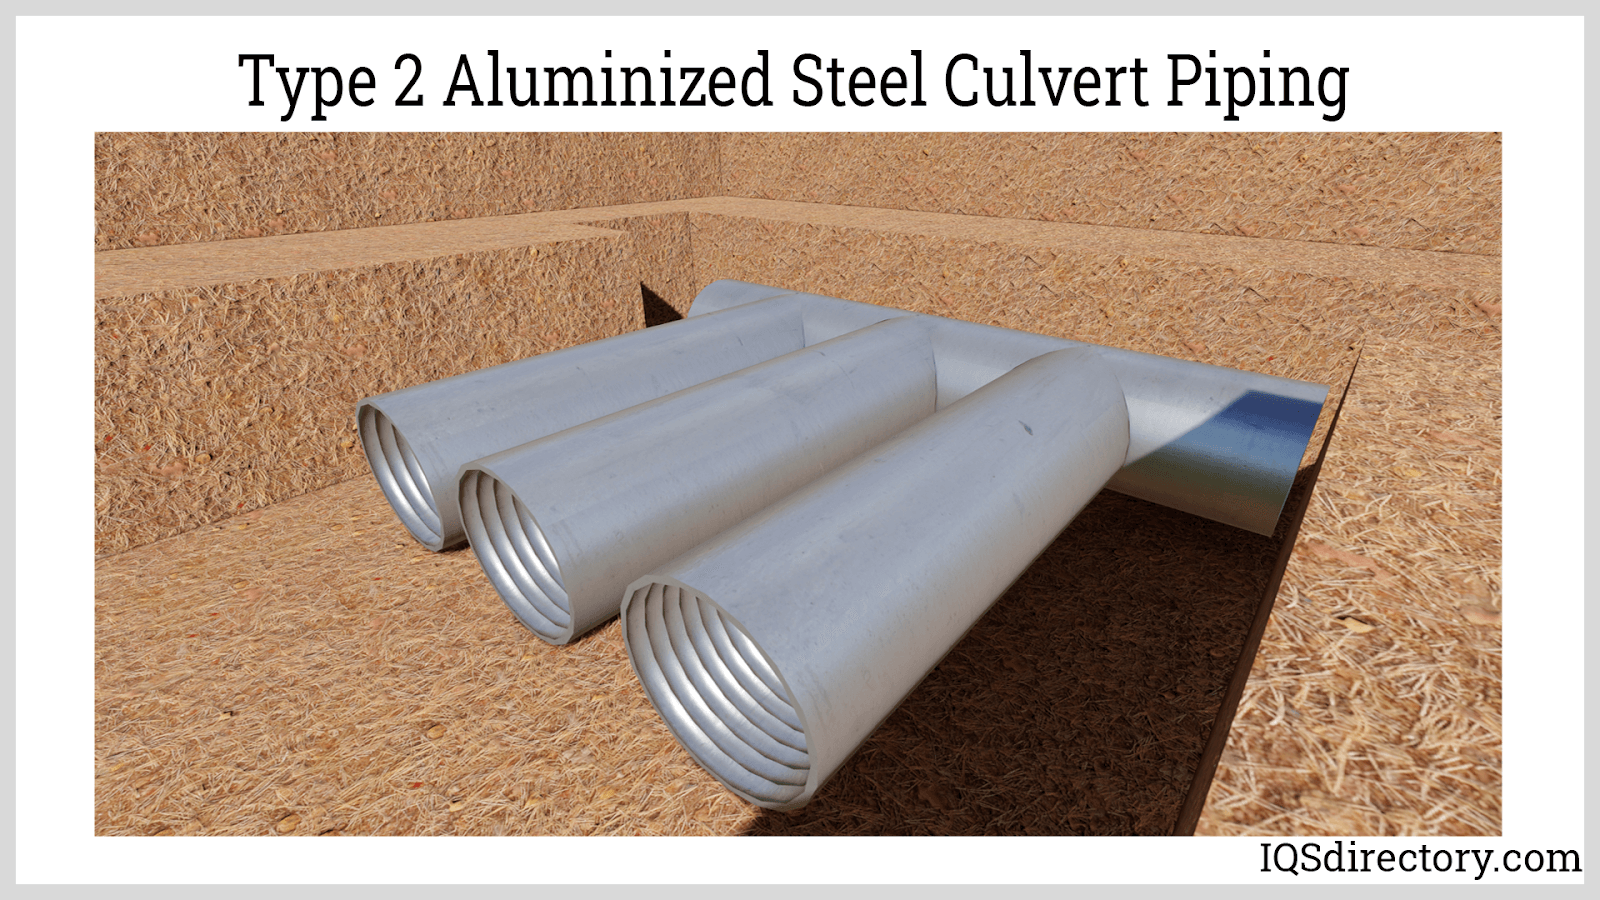 Type 2 Aluminized Steel Culvert Piping